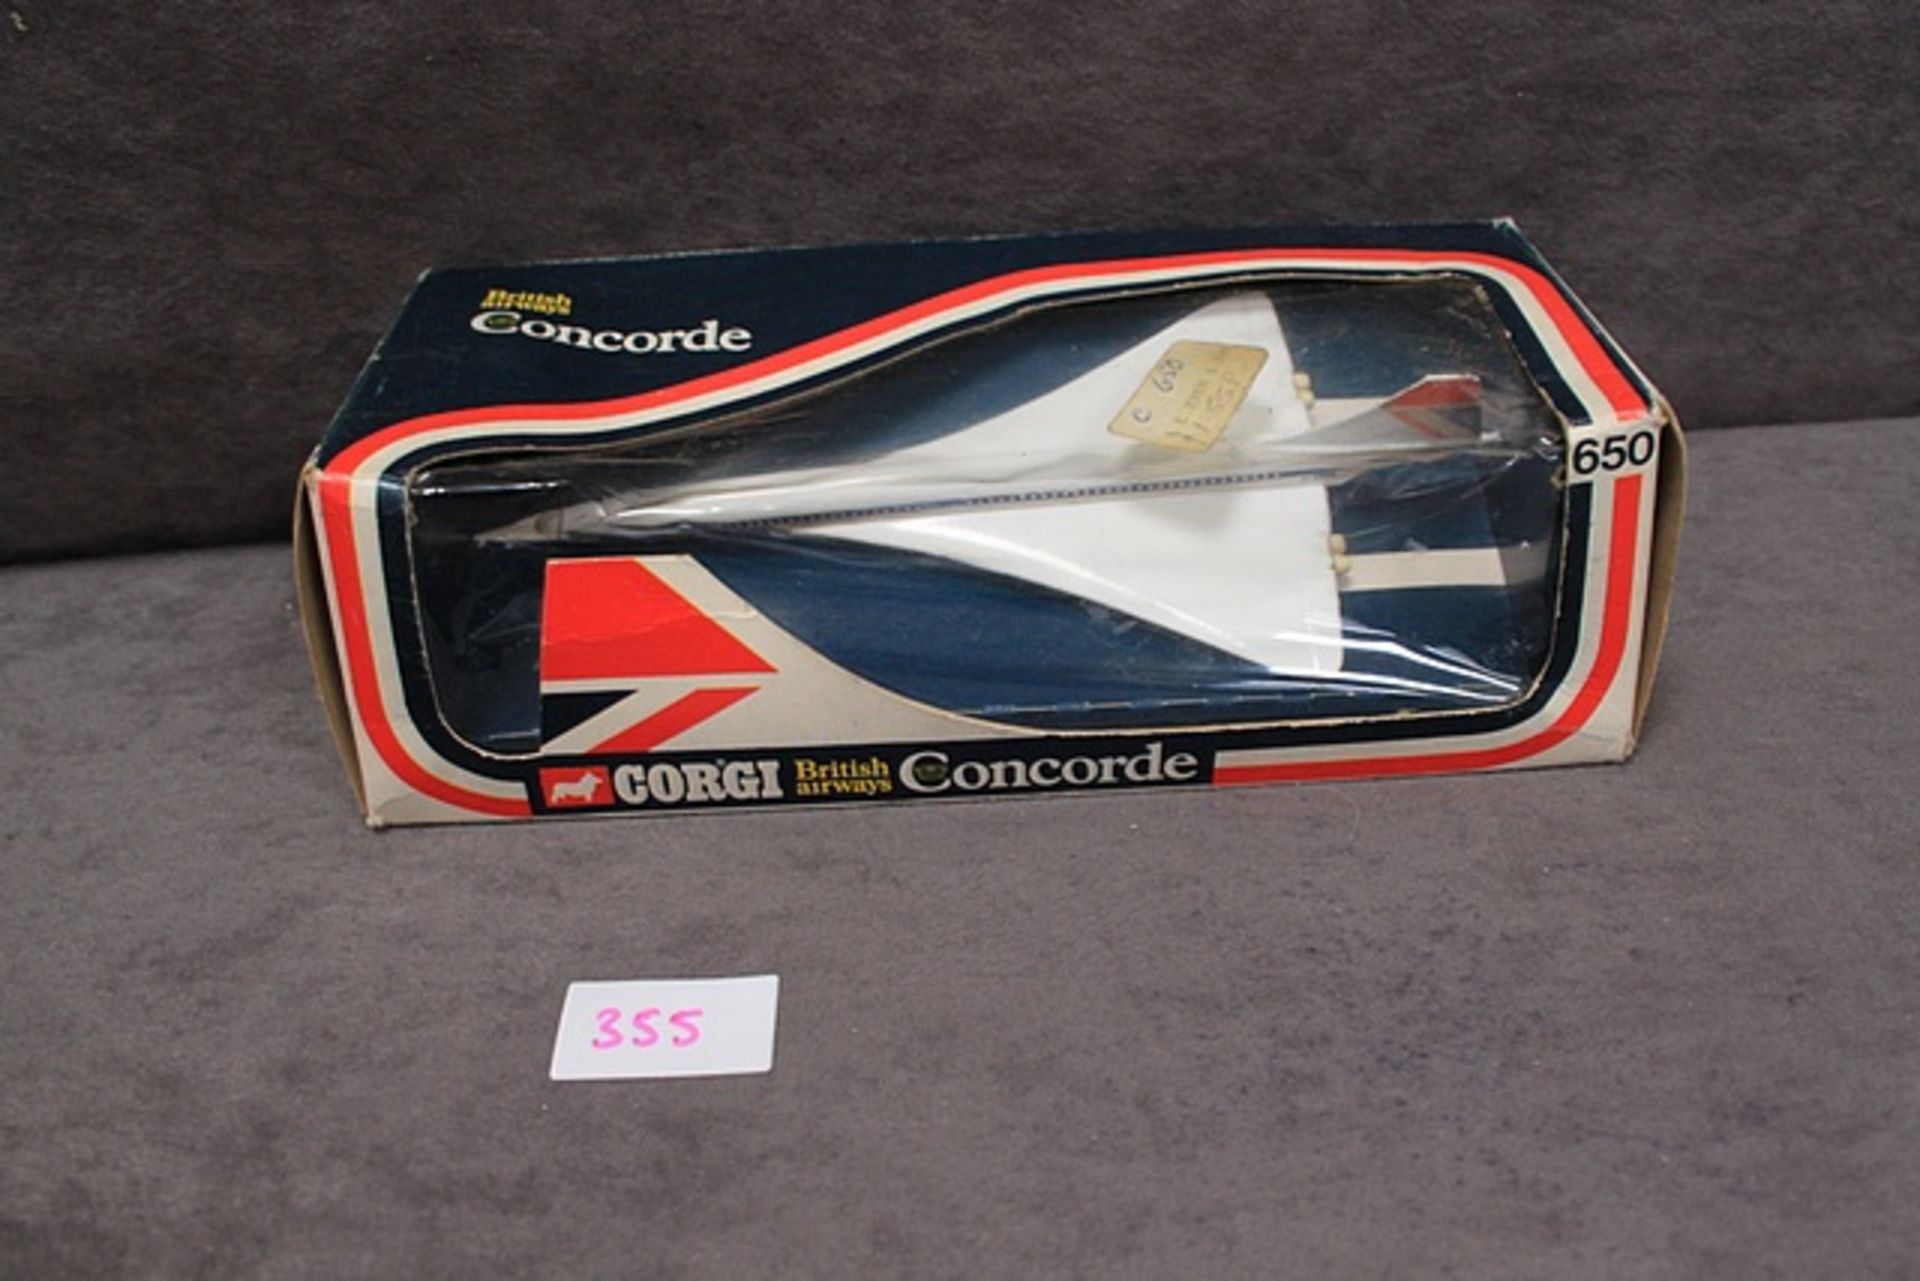 Rarer version Mint Corgi Diecast #650 British Airways Concord in box (GBBDG on tail) with slight box